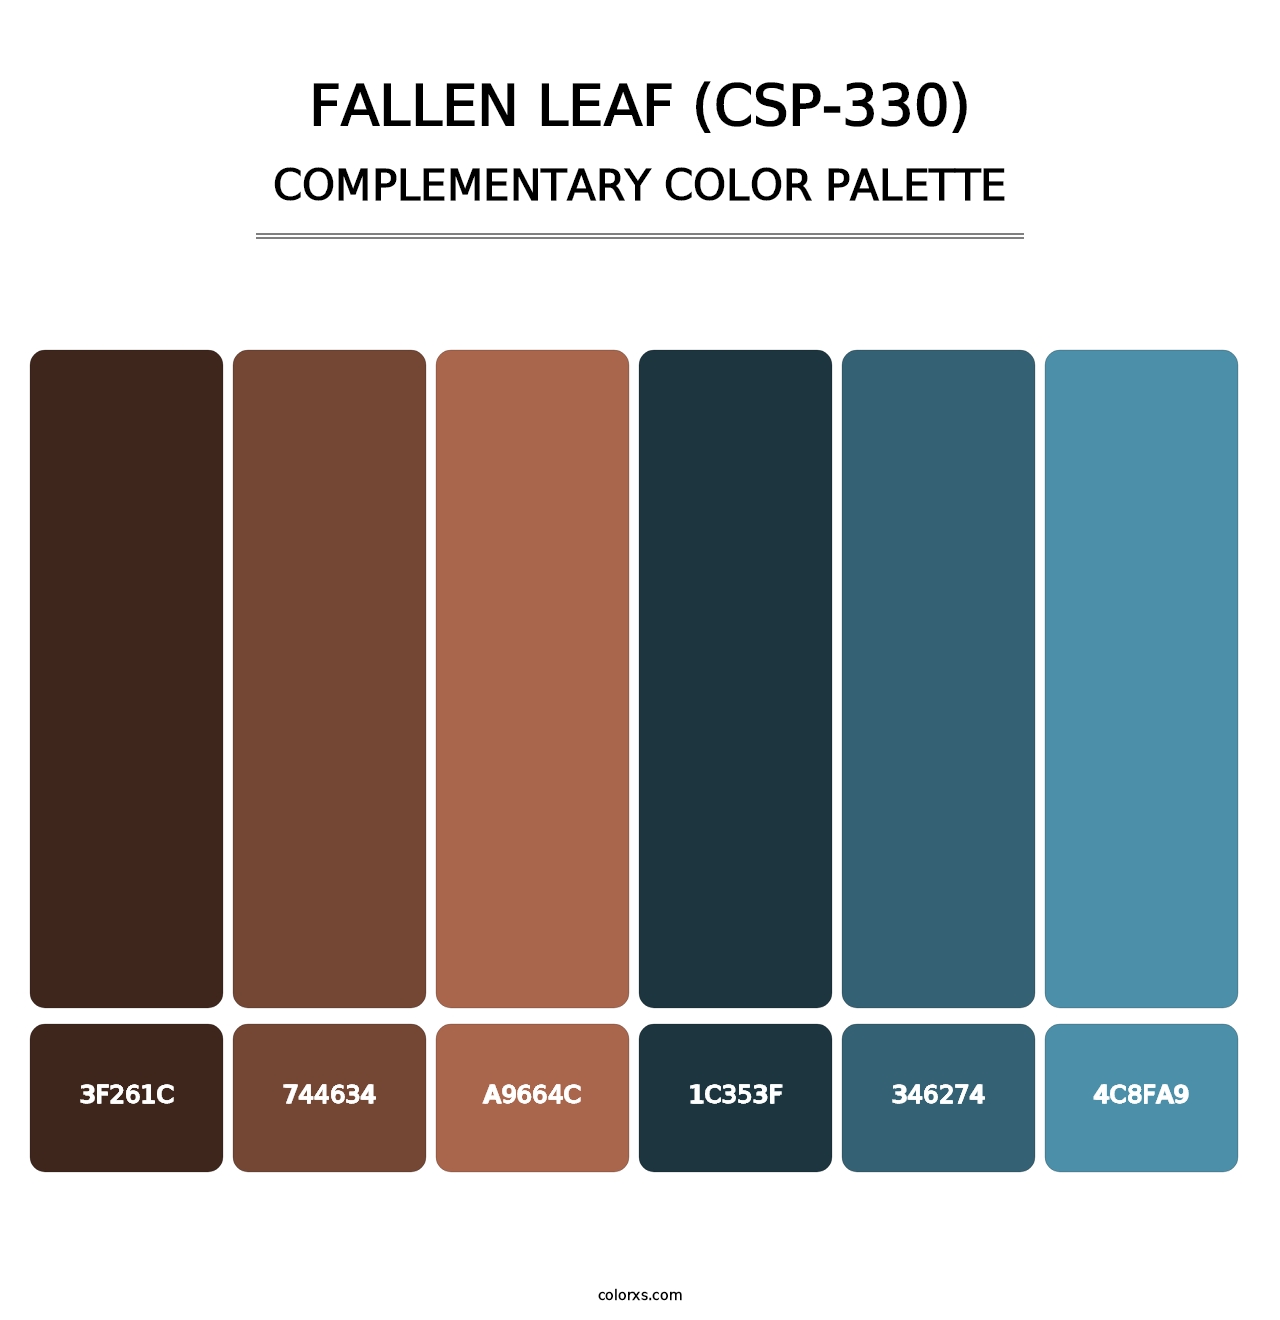 Fallen Leaf (CSP-330) - Complementary Color Palette